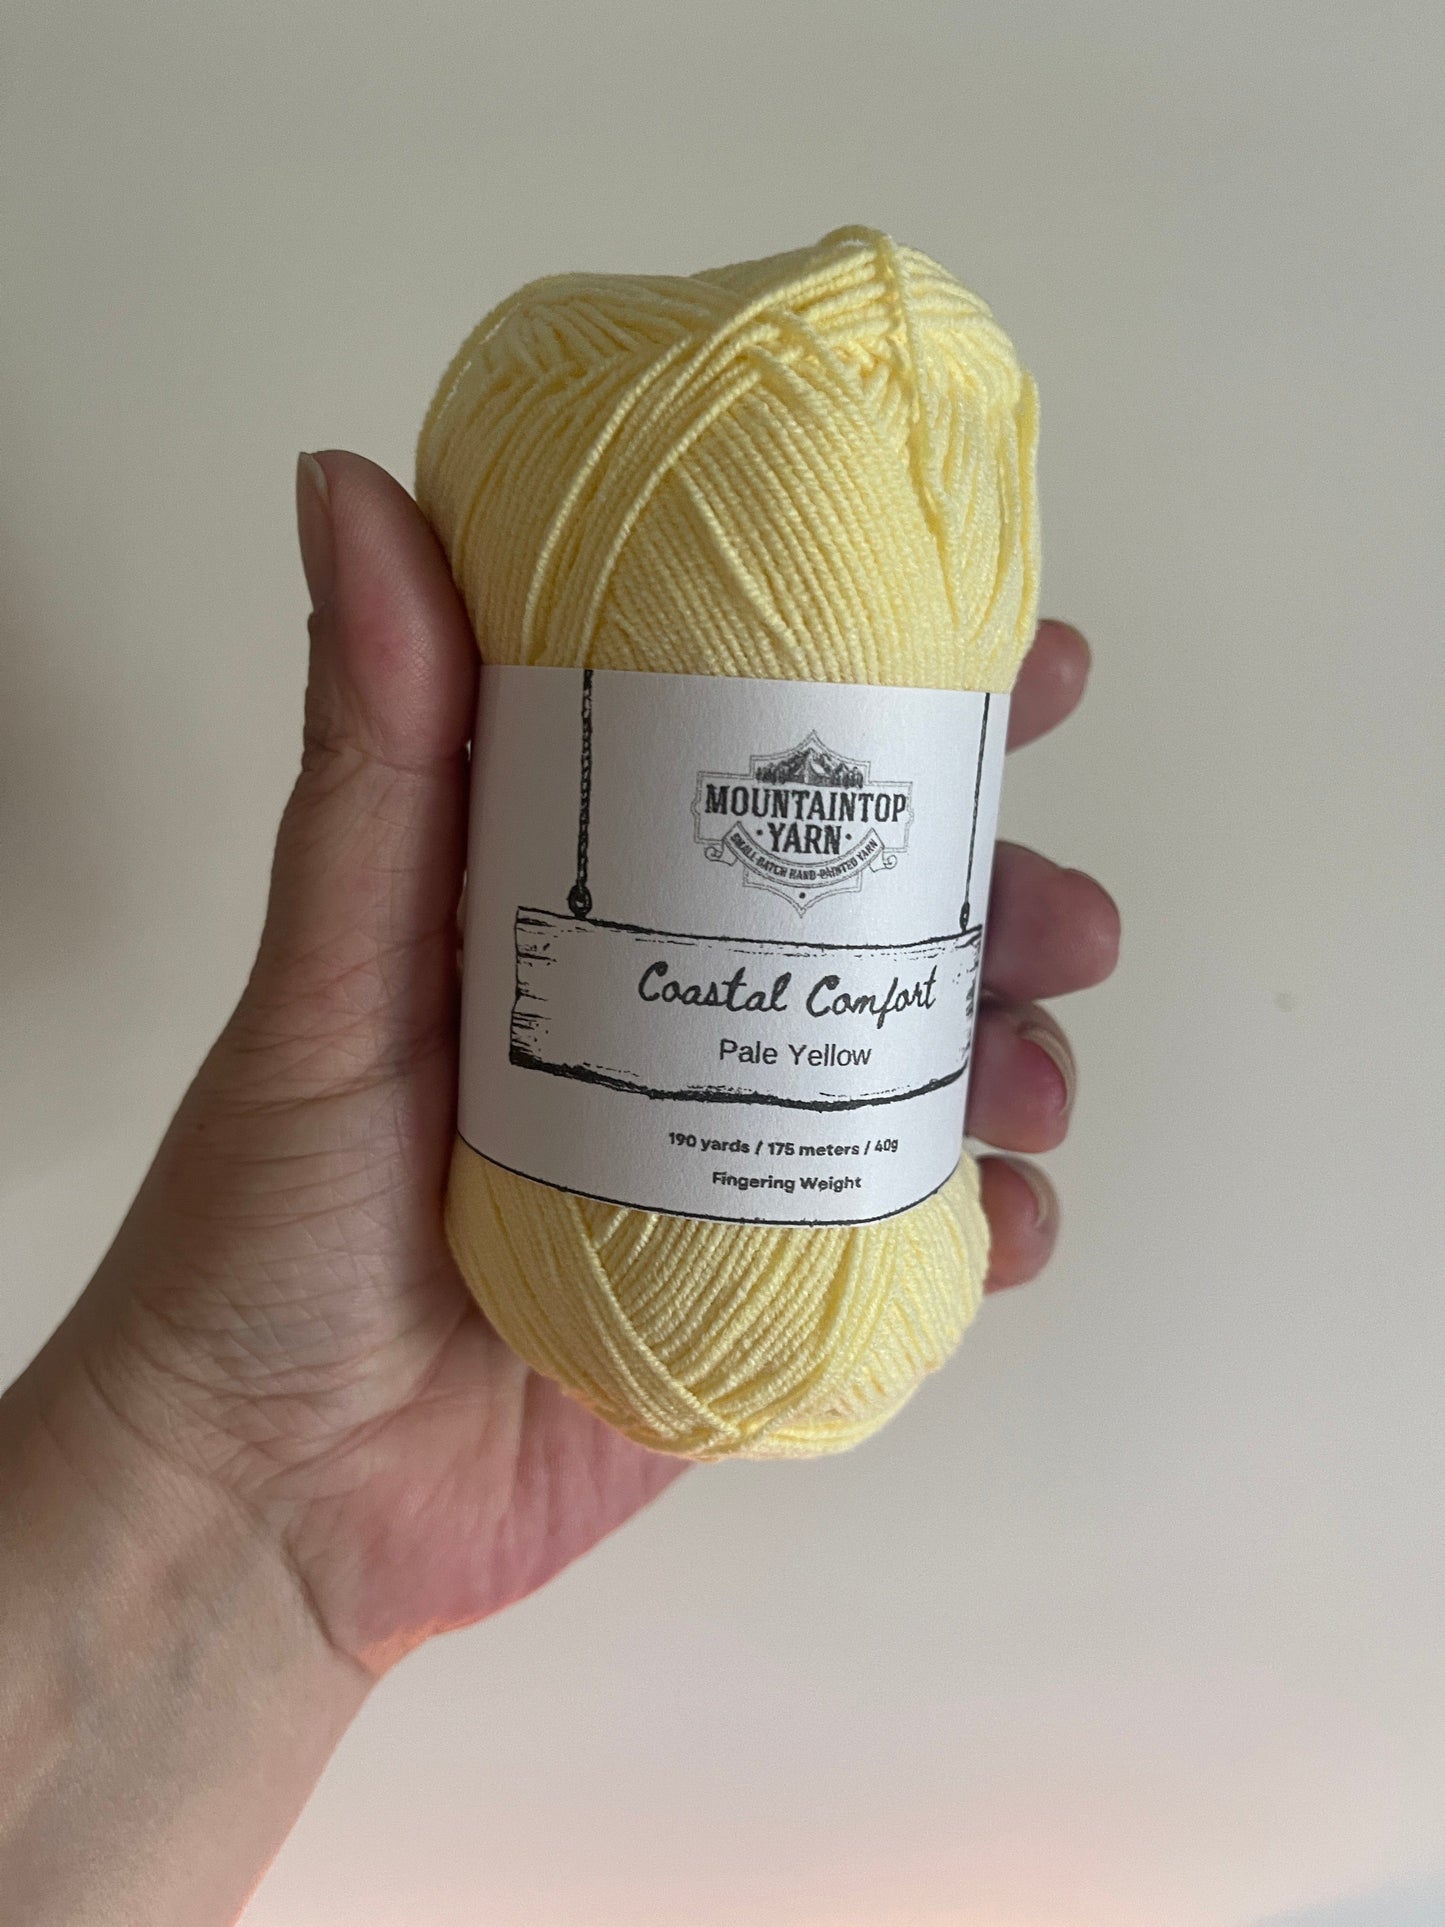 Mountaintop Yarn Pale Yellow Coastal Comfort - Cotton and Acrylic Blend Yarn Yarn